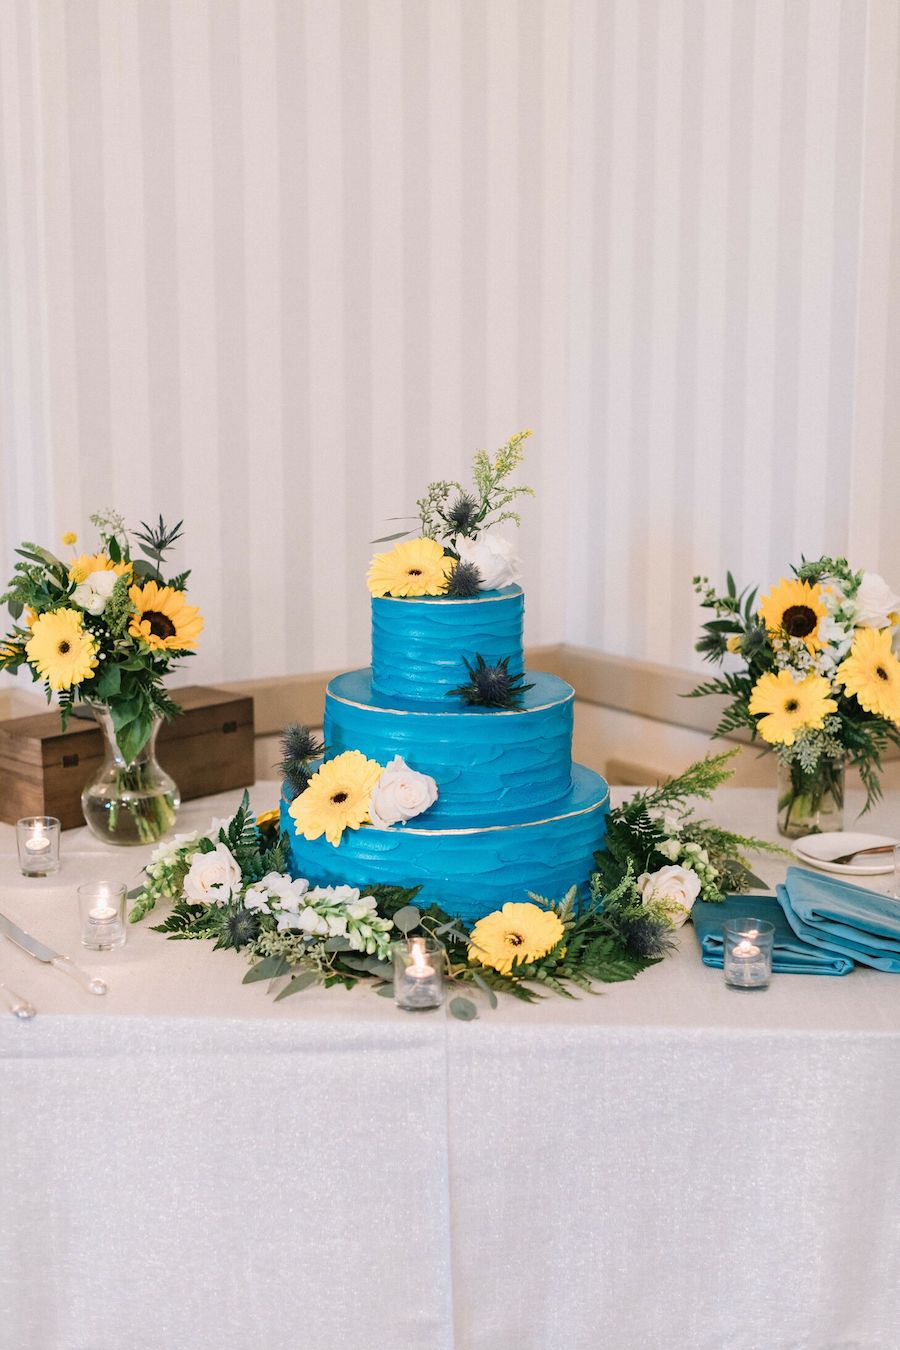 Redondo Beach Sunflower Wedding Featured on The Knot